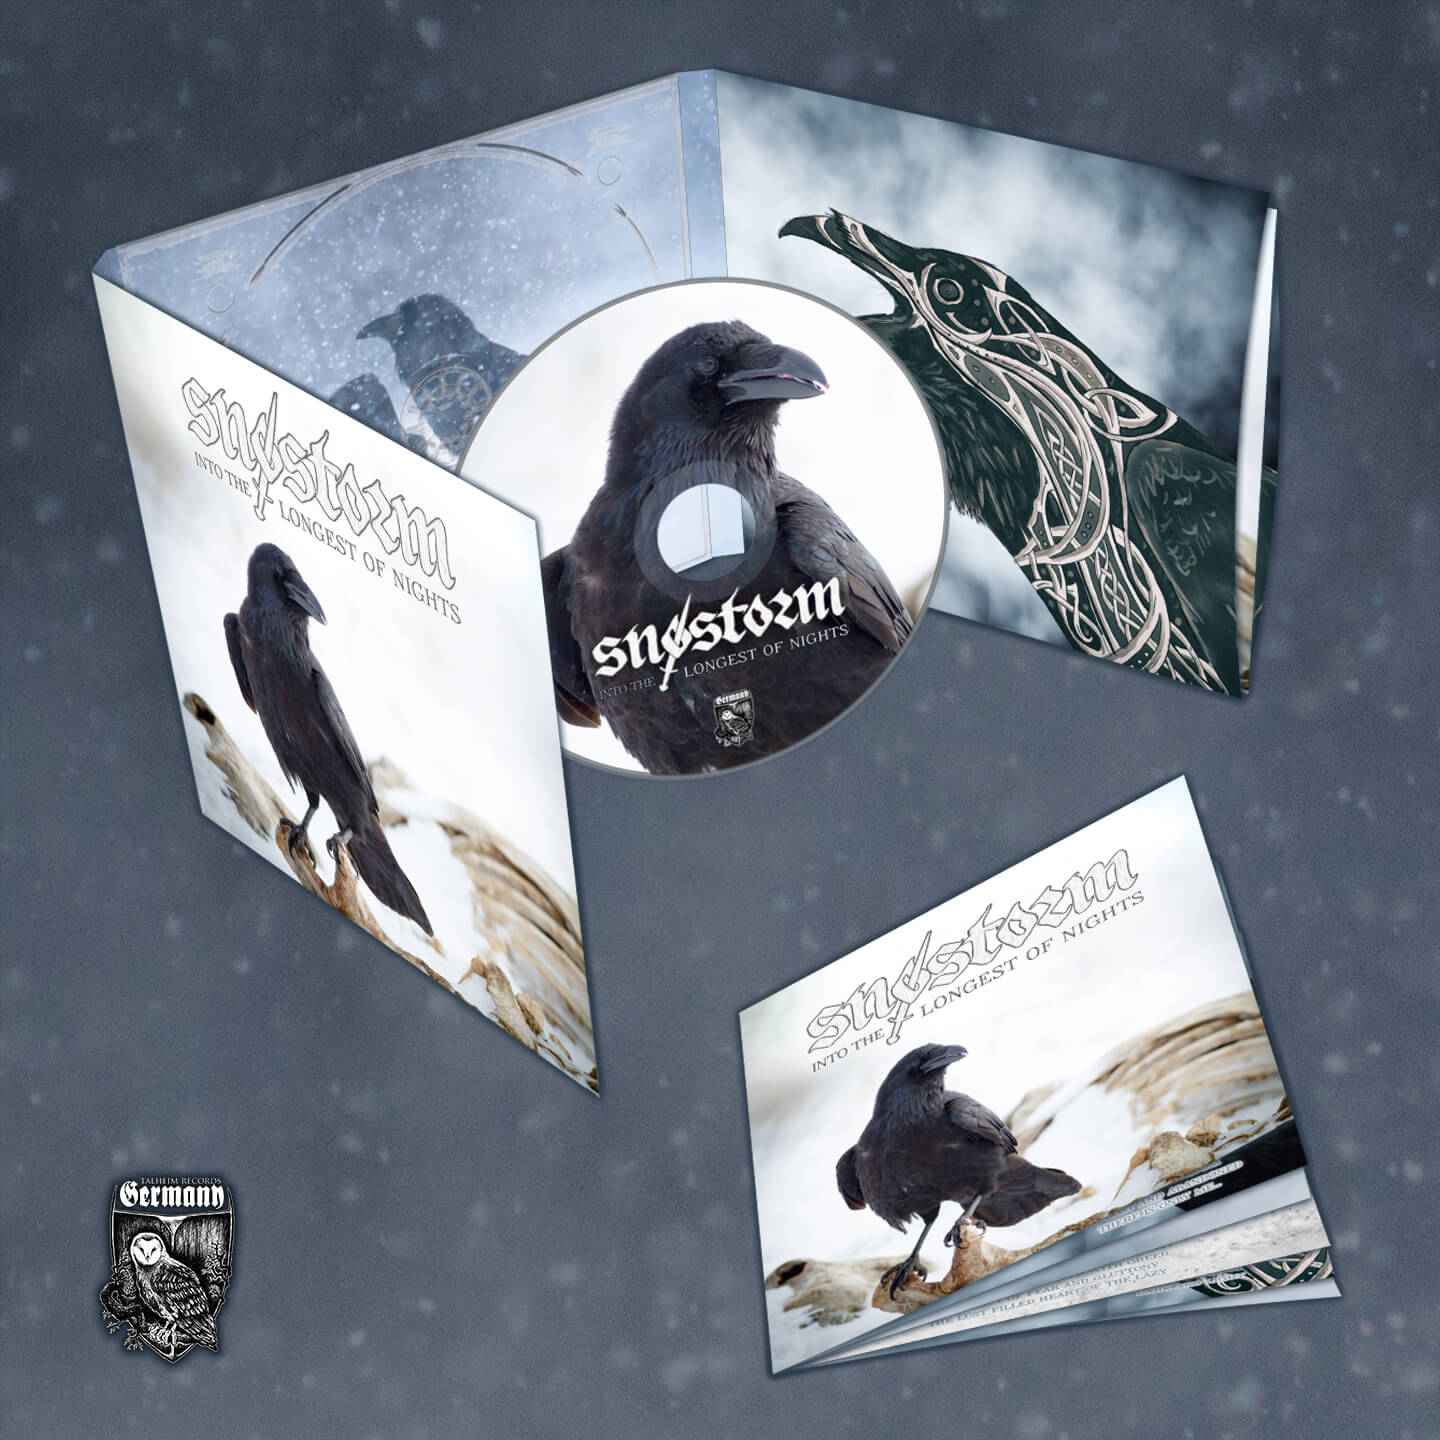 Snøstorm - Into The Longest of Nights CD Digipak